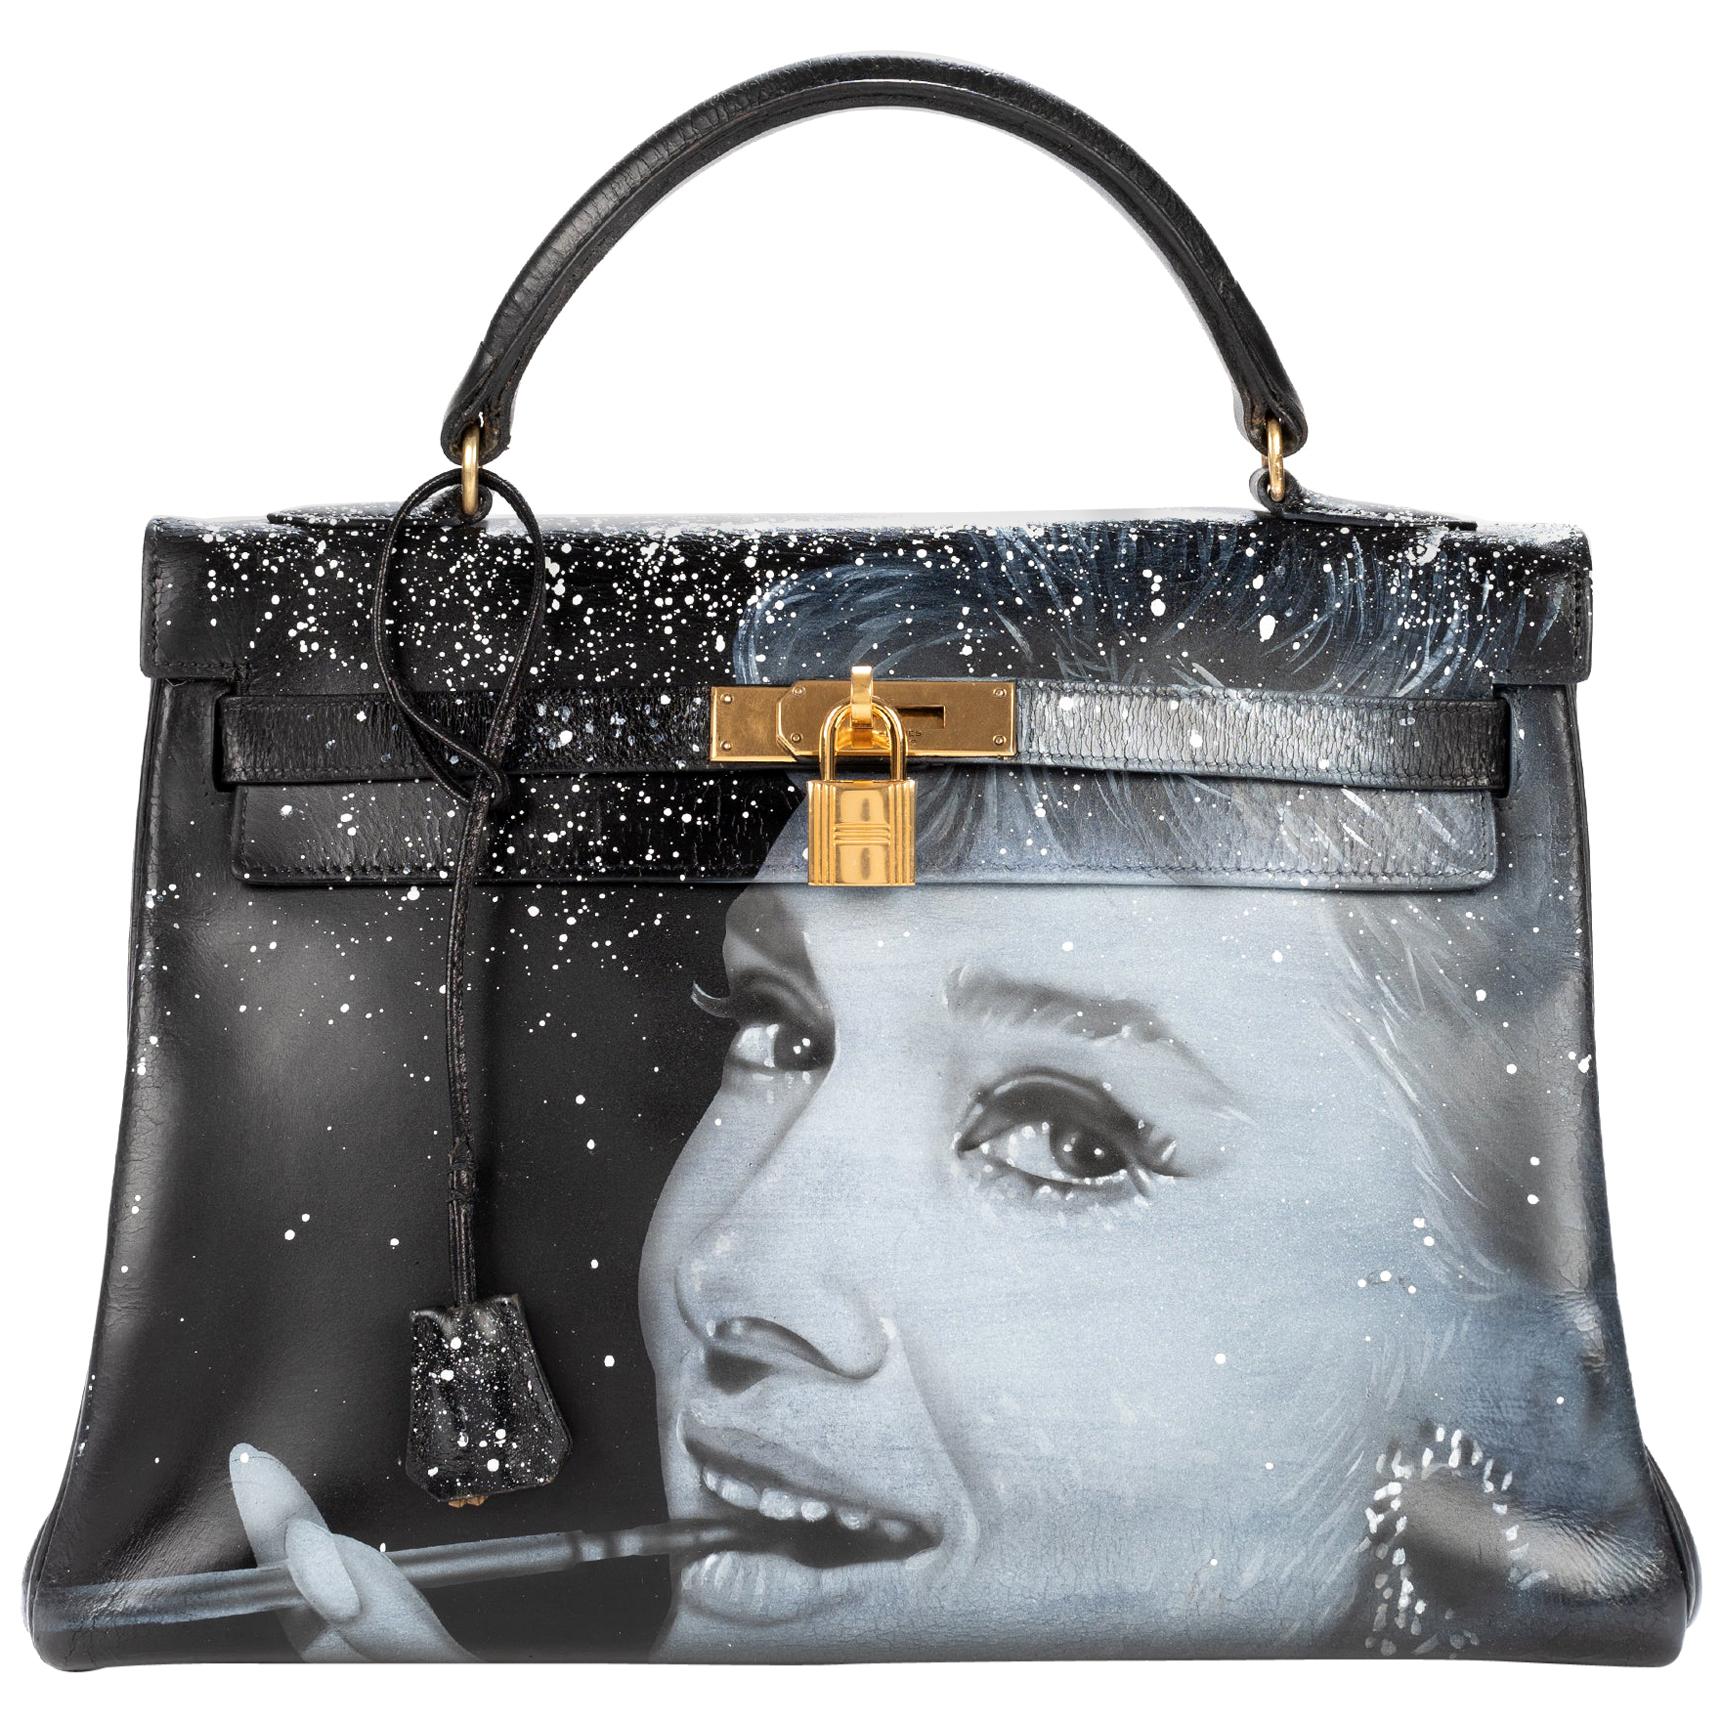 Amazing creation "Audrey Hepburn#47" on Kelly 32 cm handbag in black calfskin